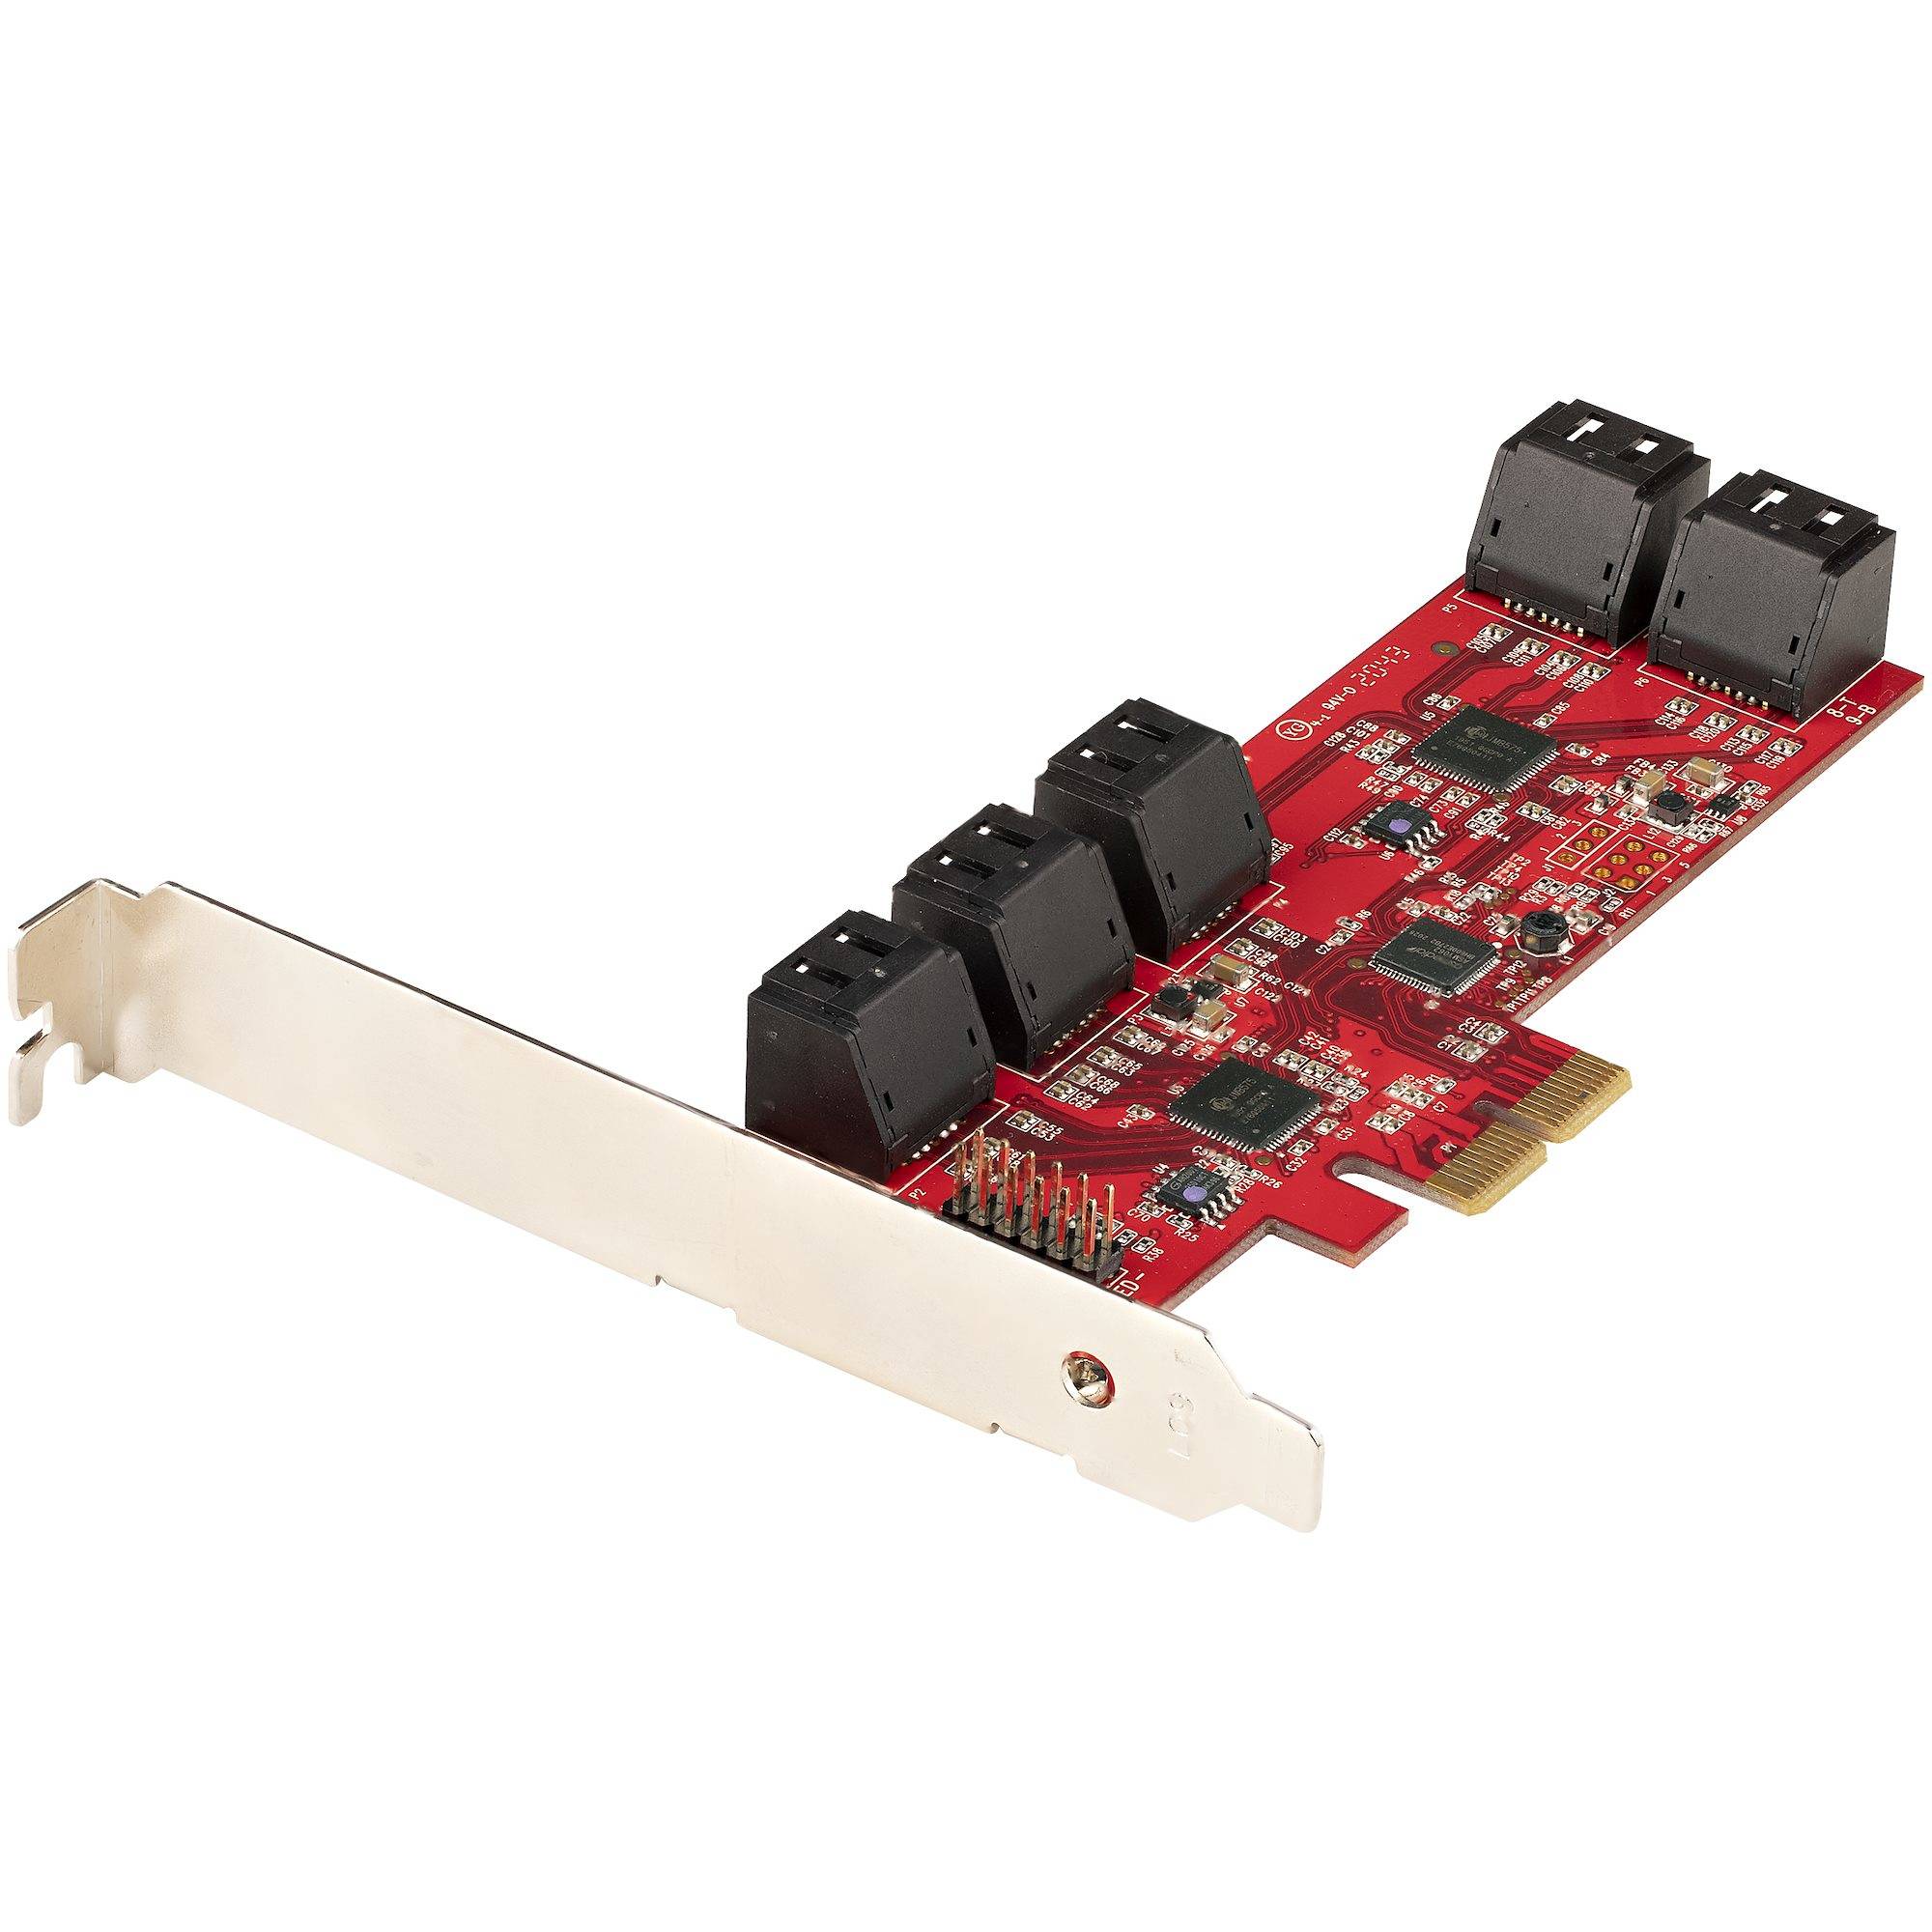 Rca Informatique - Image du produit : CARTE PCI EXPRESS SATA 10 PORTS (6GBPS) - ASM1166 NON-RAID